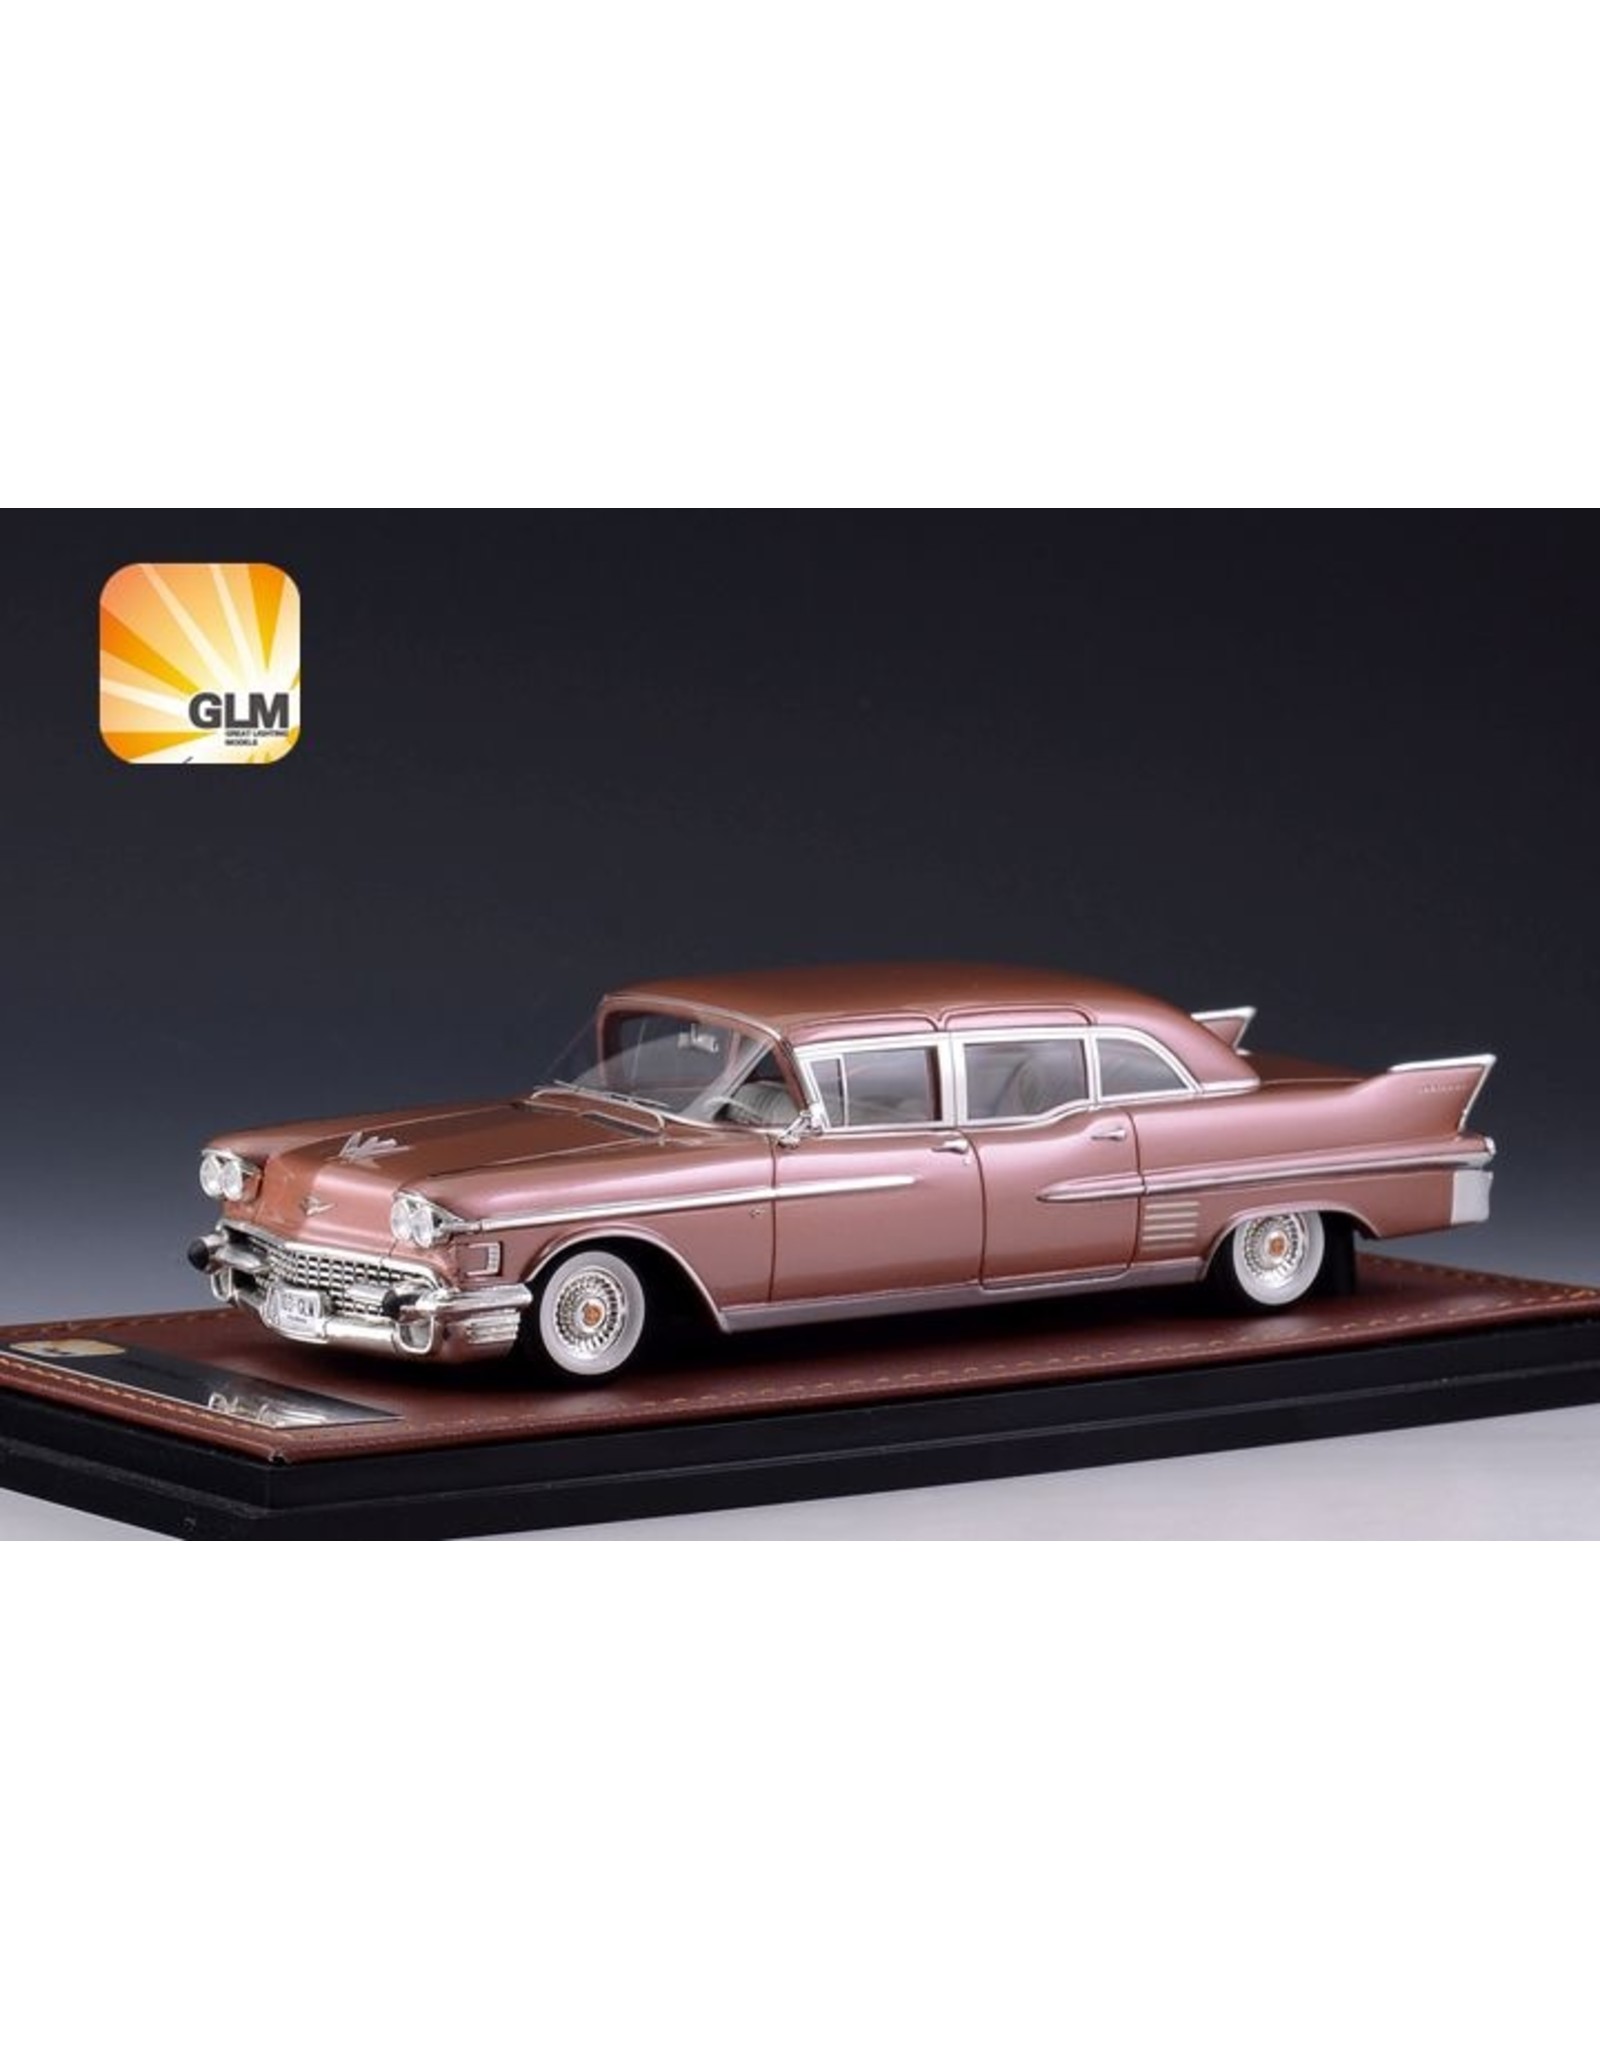 Cadillac(General Motors) Cadillac Fleetwood 75 Limousine(1958)desert bronze metallic.